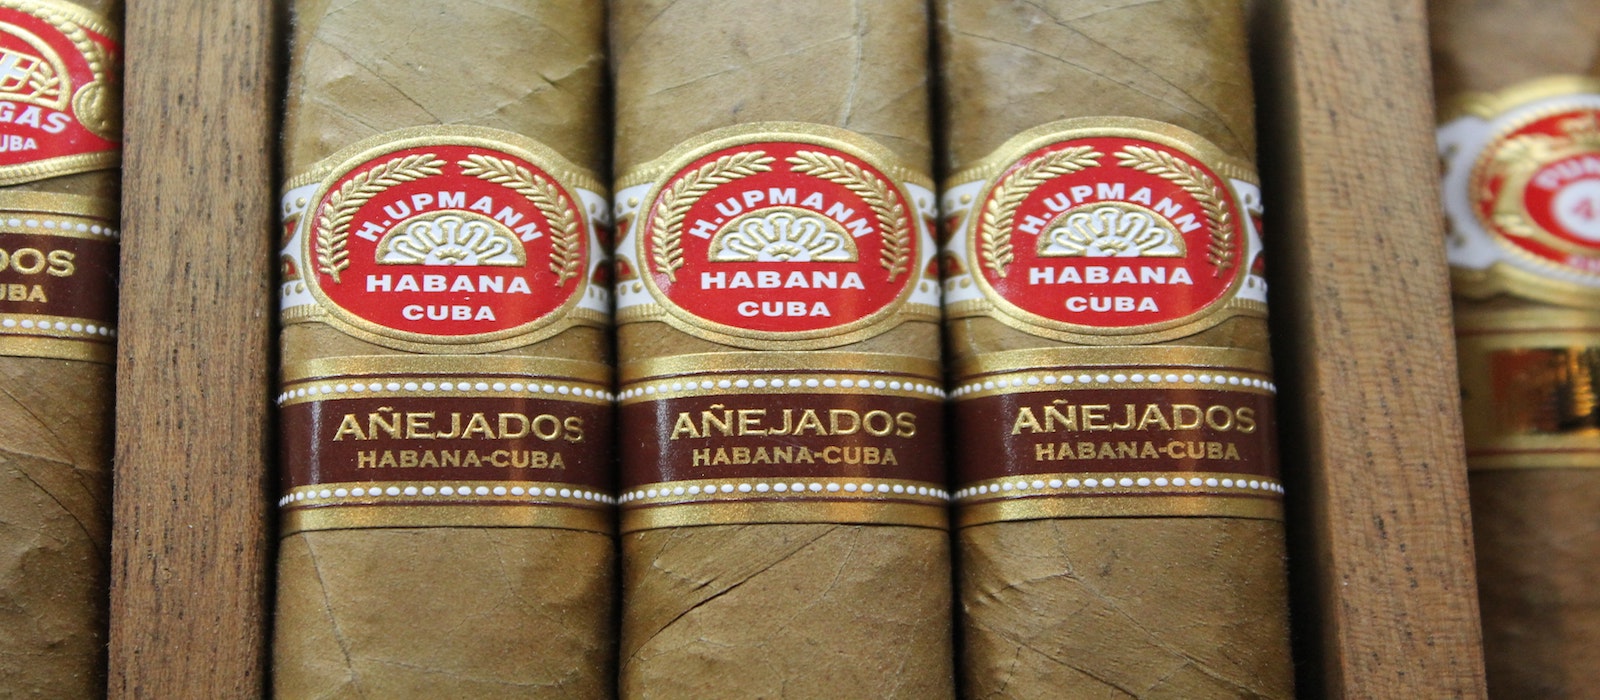 Cigares Habana